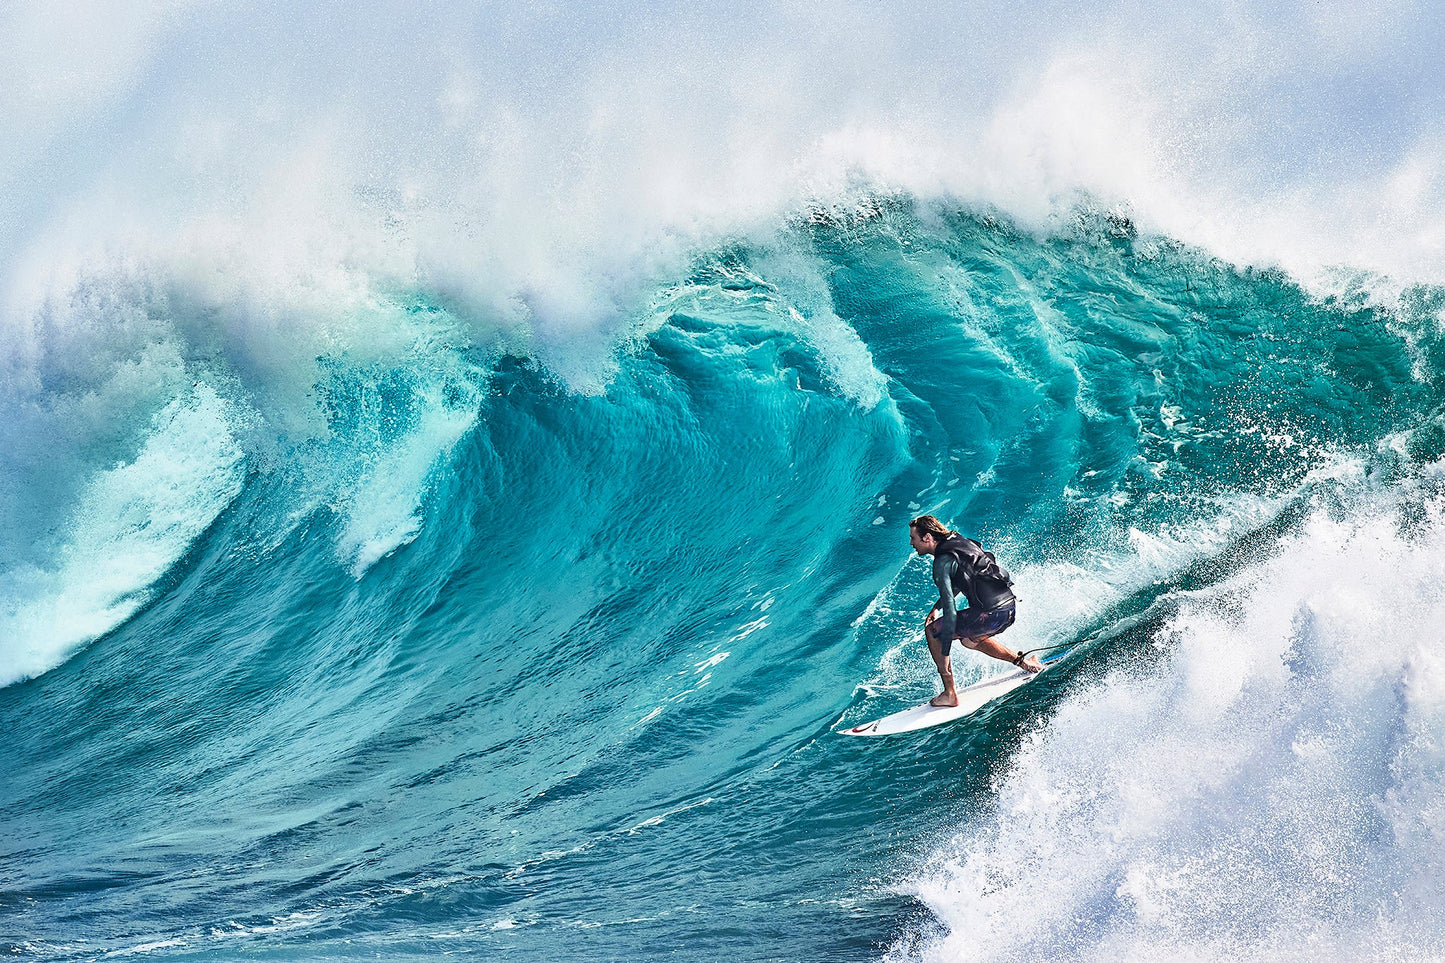 Freedom - Surfer at Snapper Rocks, Gold Coast